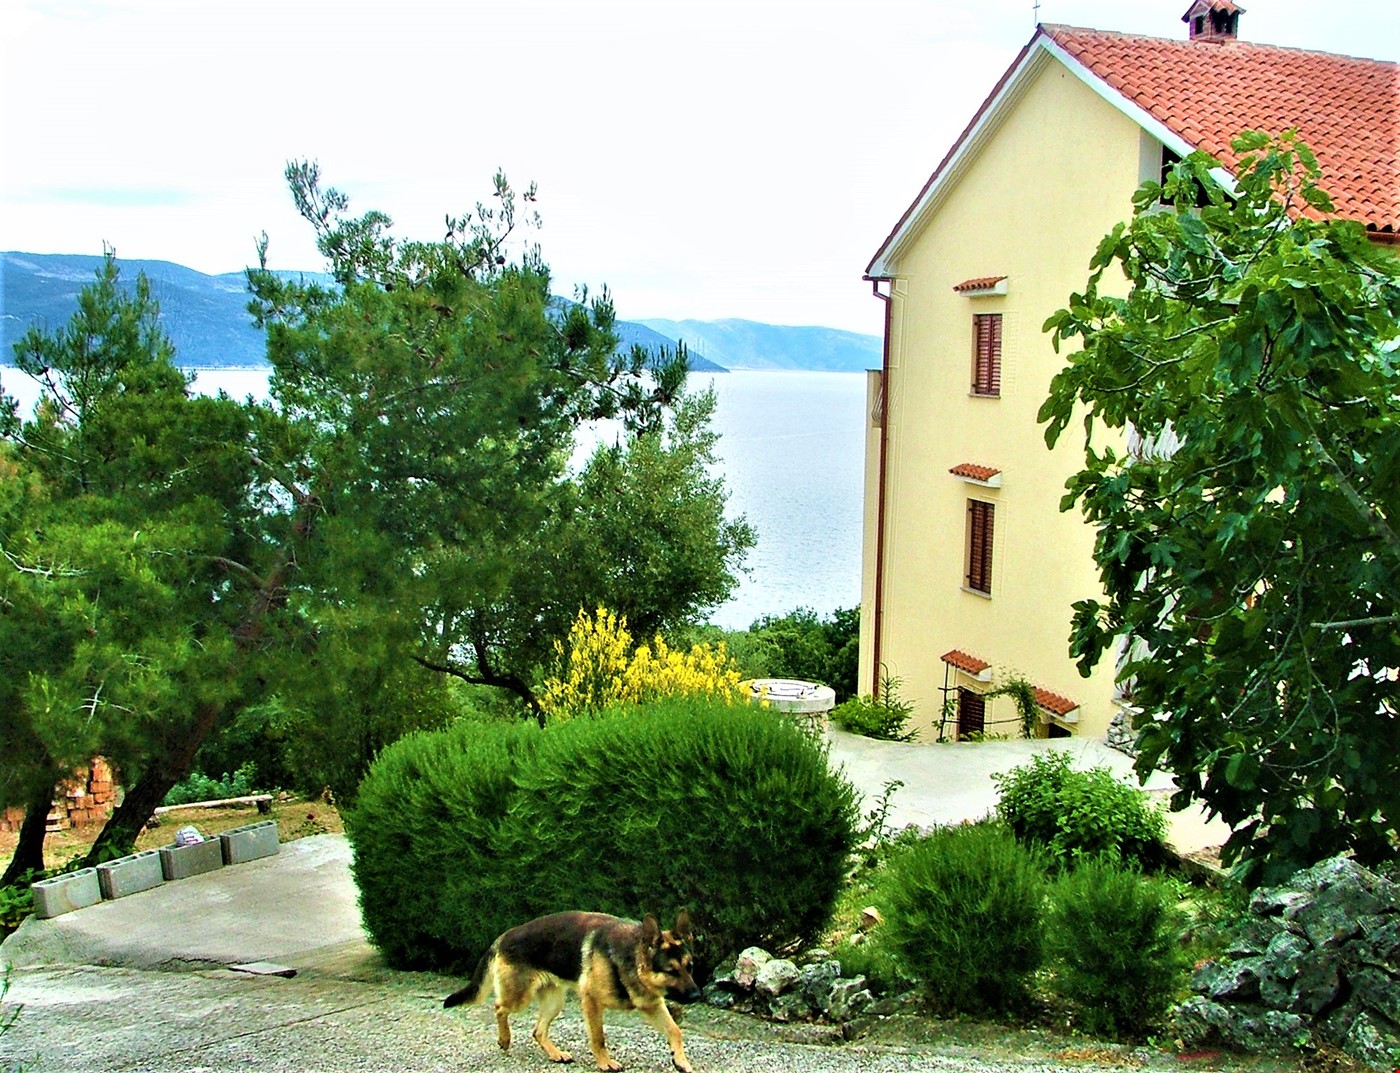 Hotel Plomin Croatia nomad remote 1f3f50cb-4c55-49b4-81b6-7209607a888b_oustside.jpg